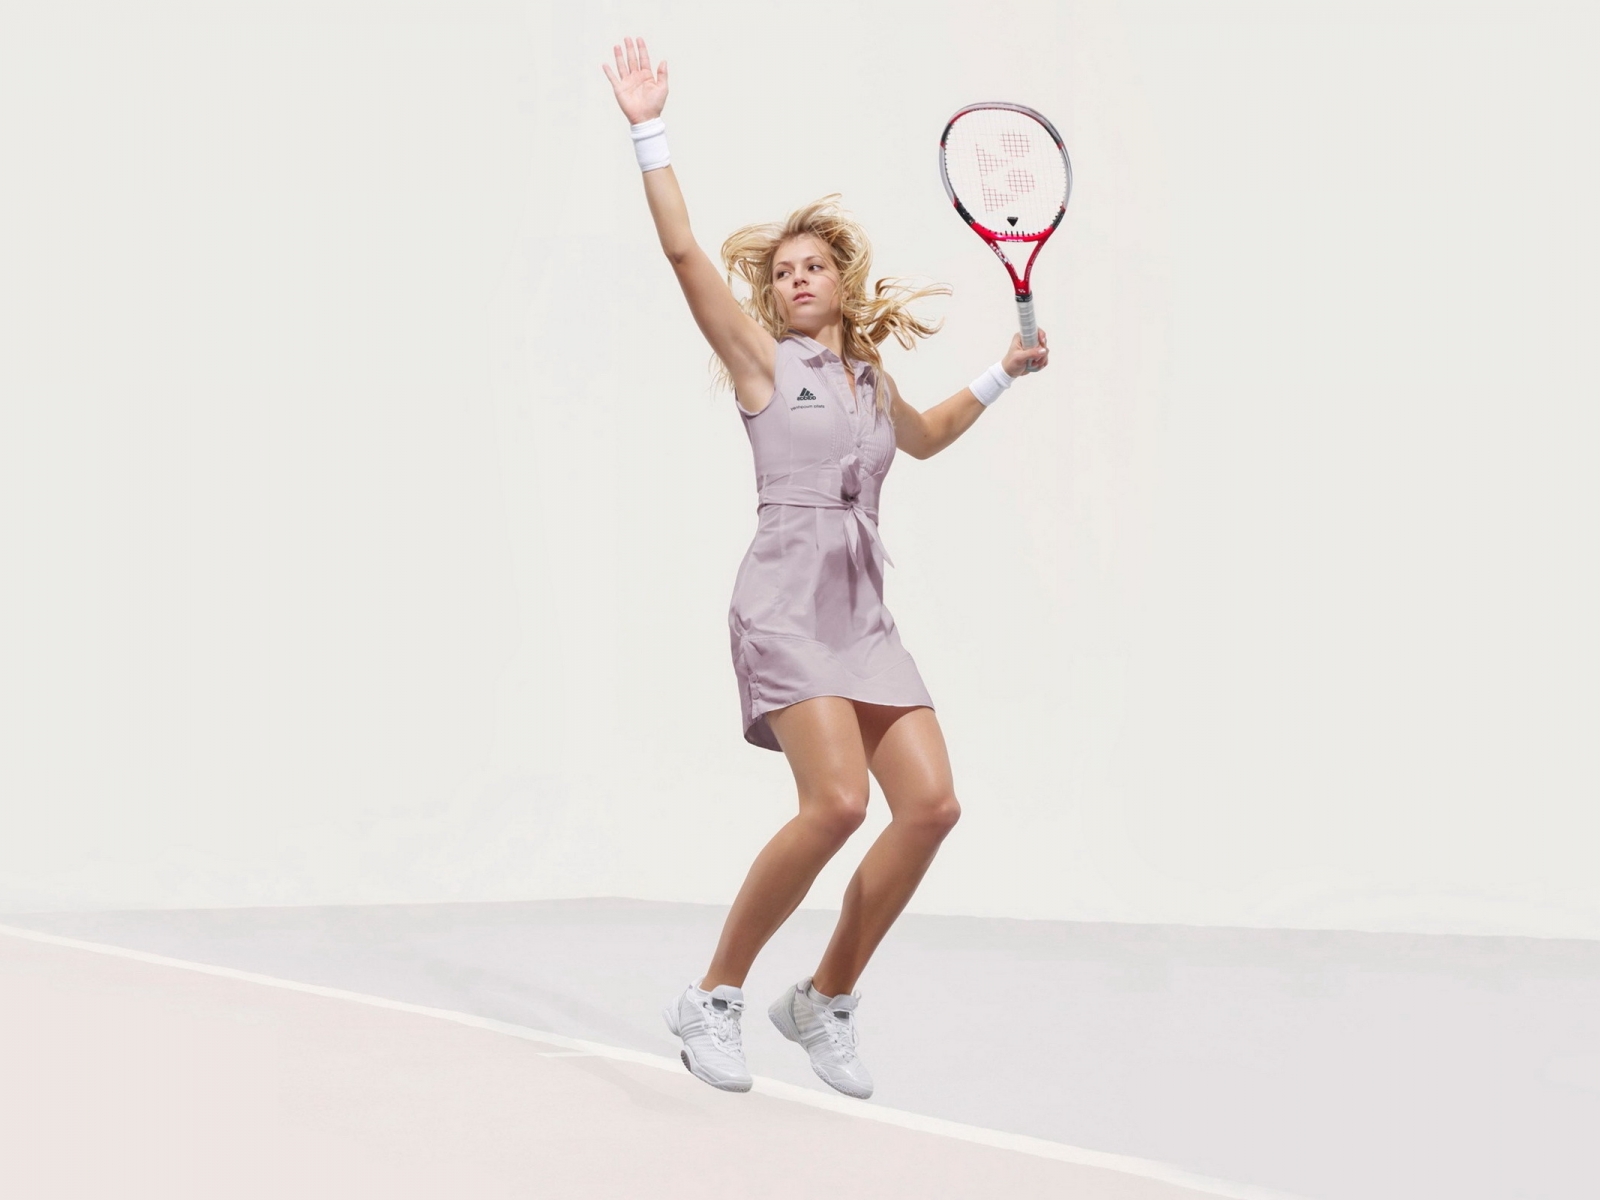 Спорт Теннис кириленко, ракетка, рука, блондинка обои рабочий стол